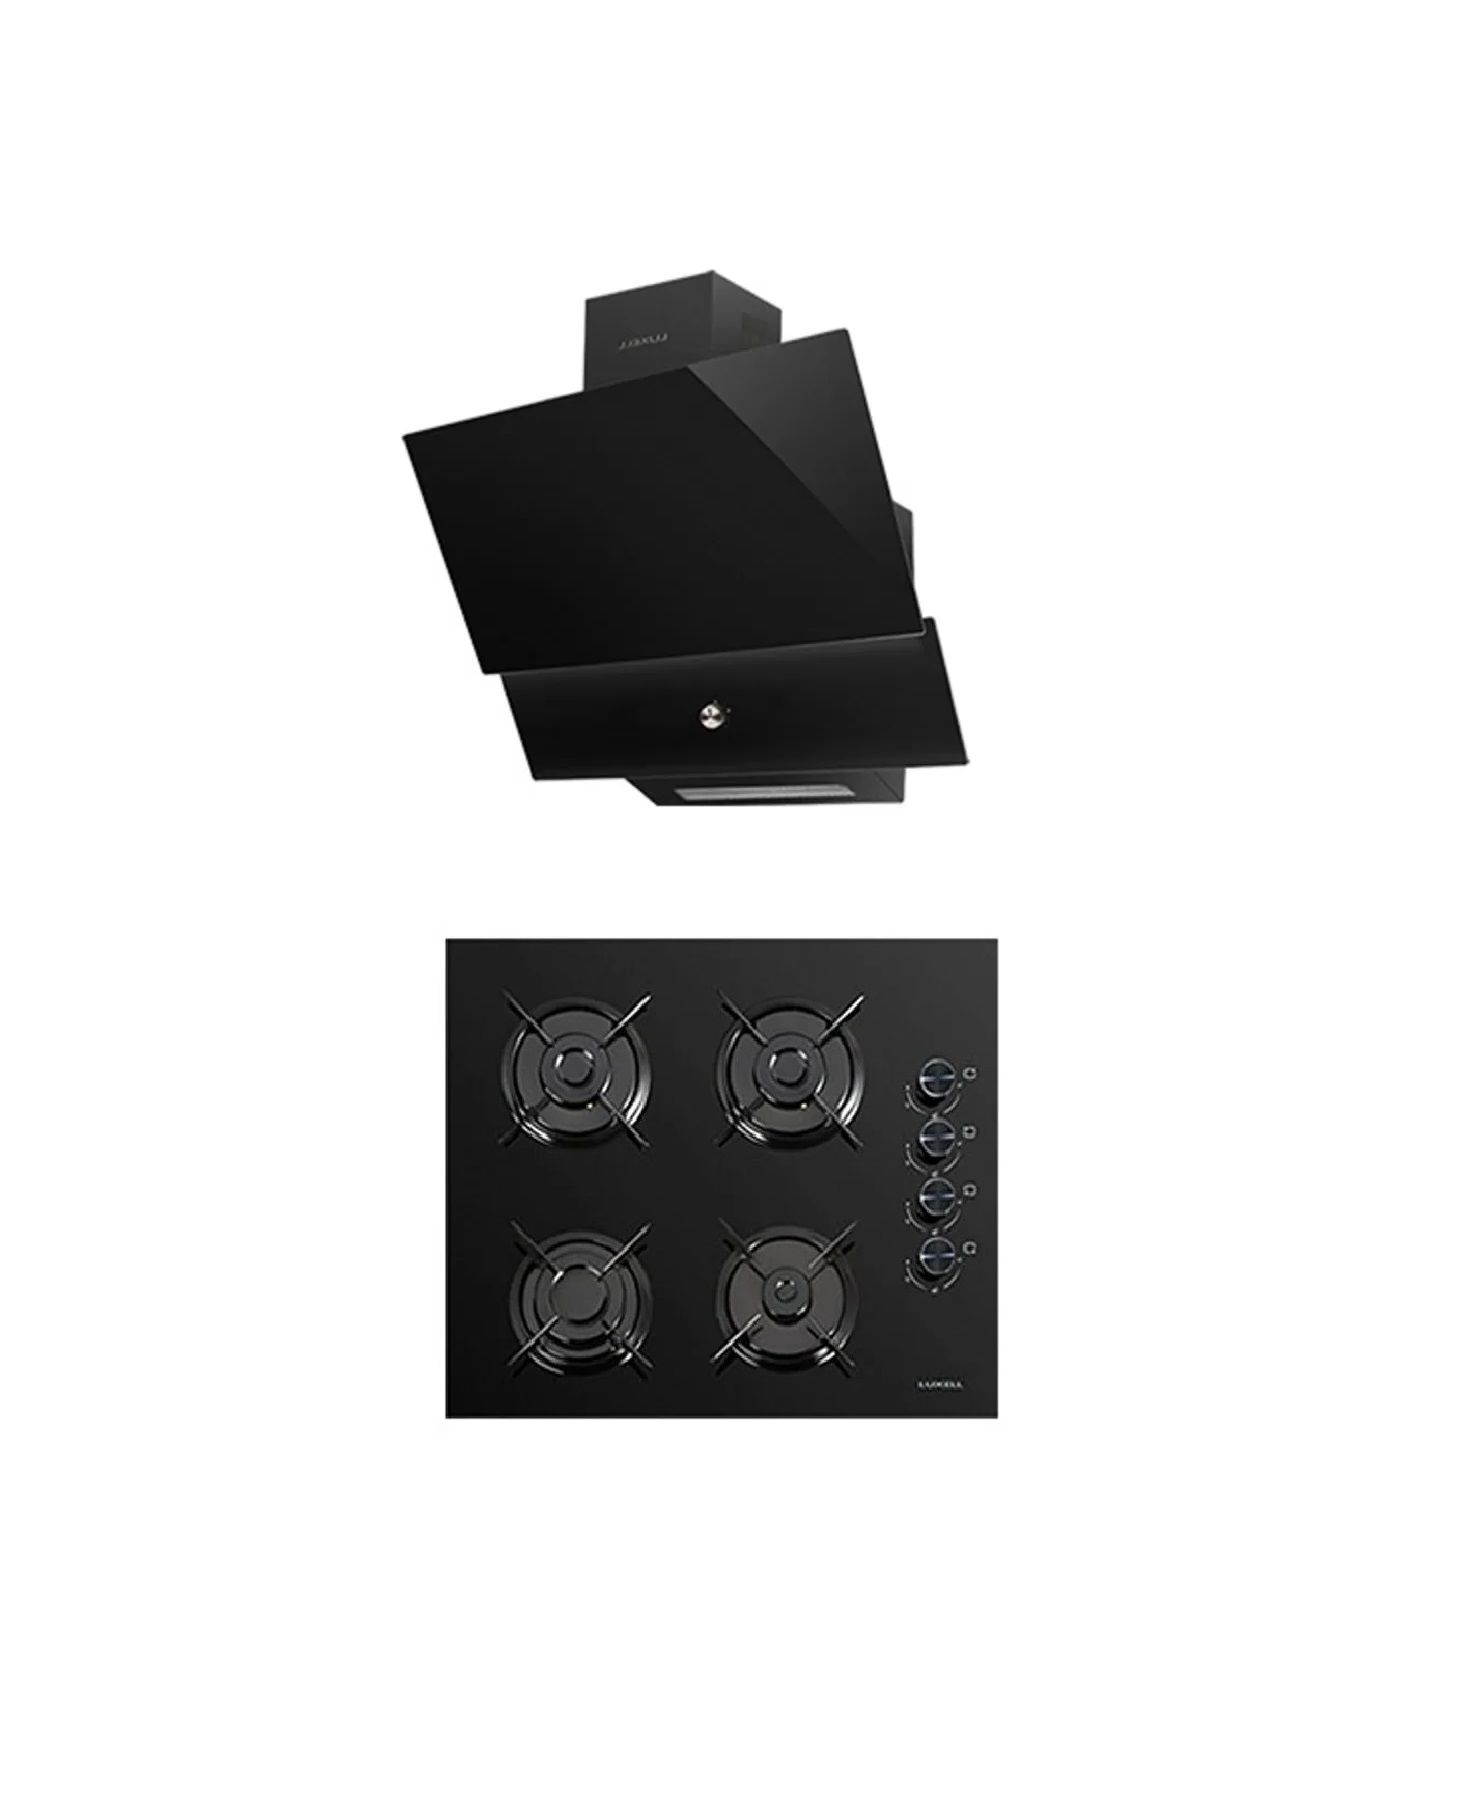 Luxell 88 Litre Süper Kristal Siyah Ankastre 2'li Set OC88 Ankastre Cam Ocak/ DA88 Davlumbaz Rotary Düğmeli